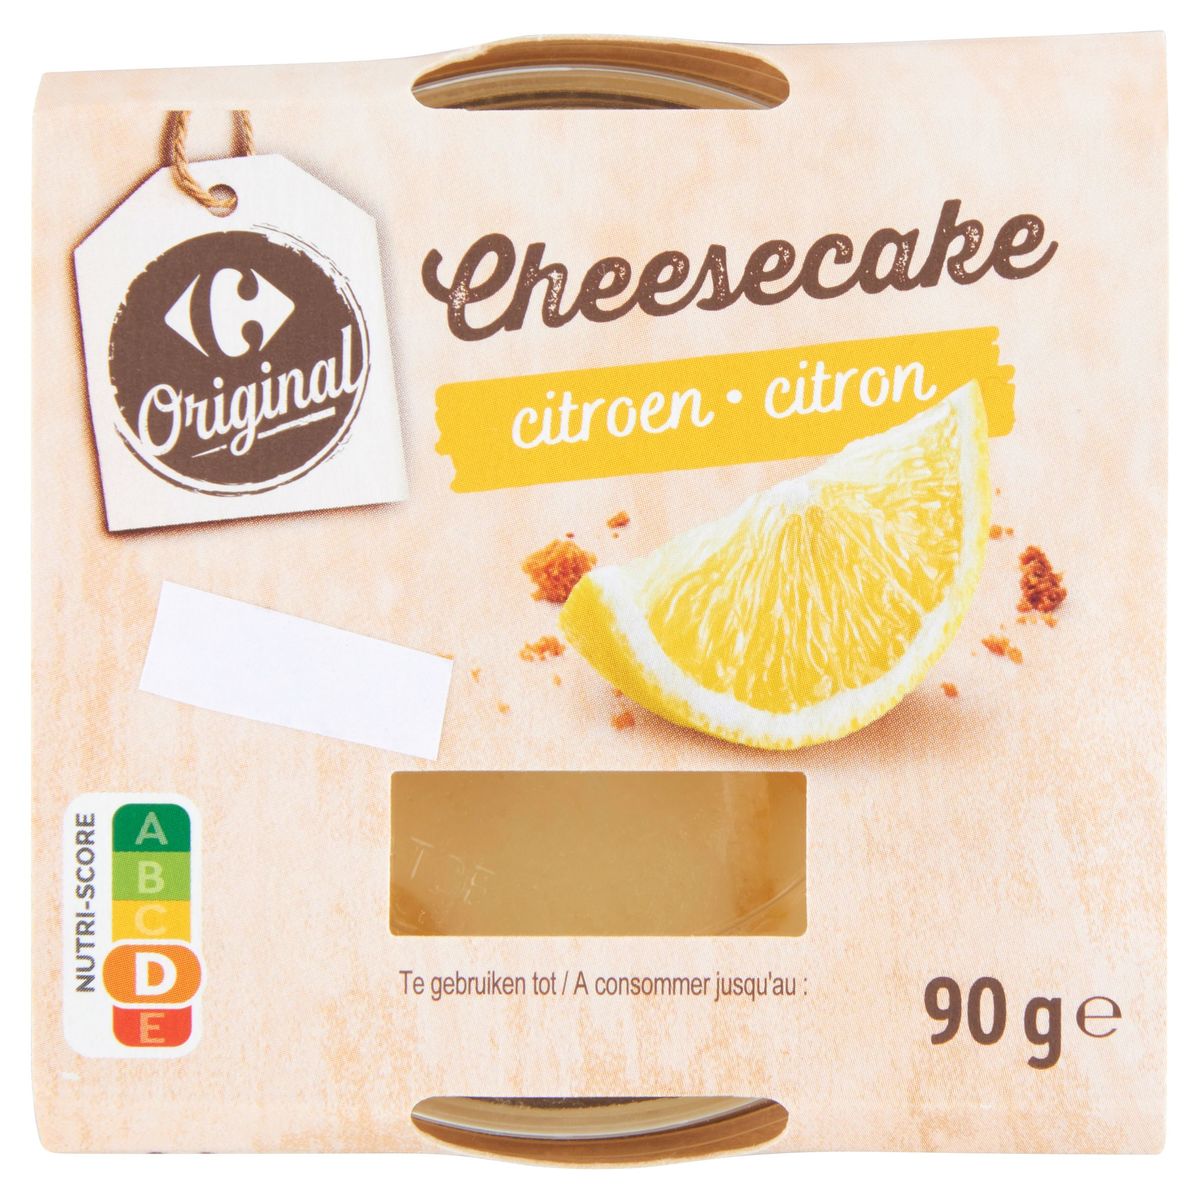 Carrefour Original Cheesecake Citroen 90 g